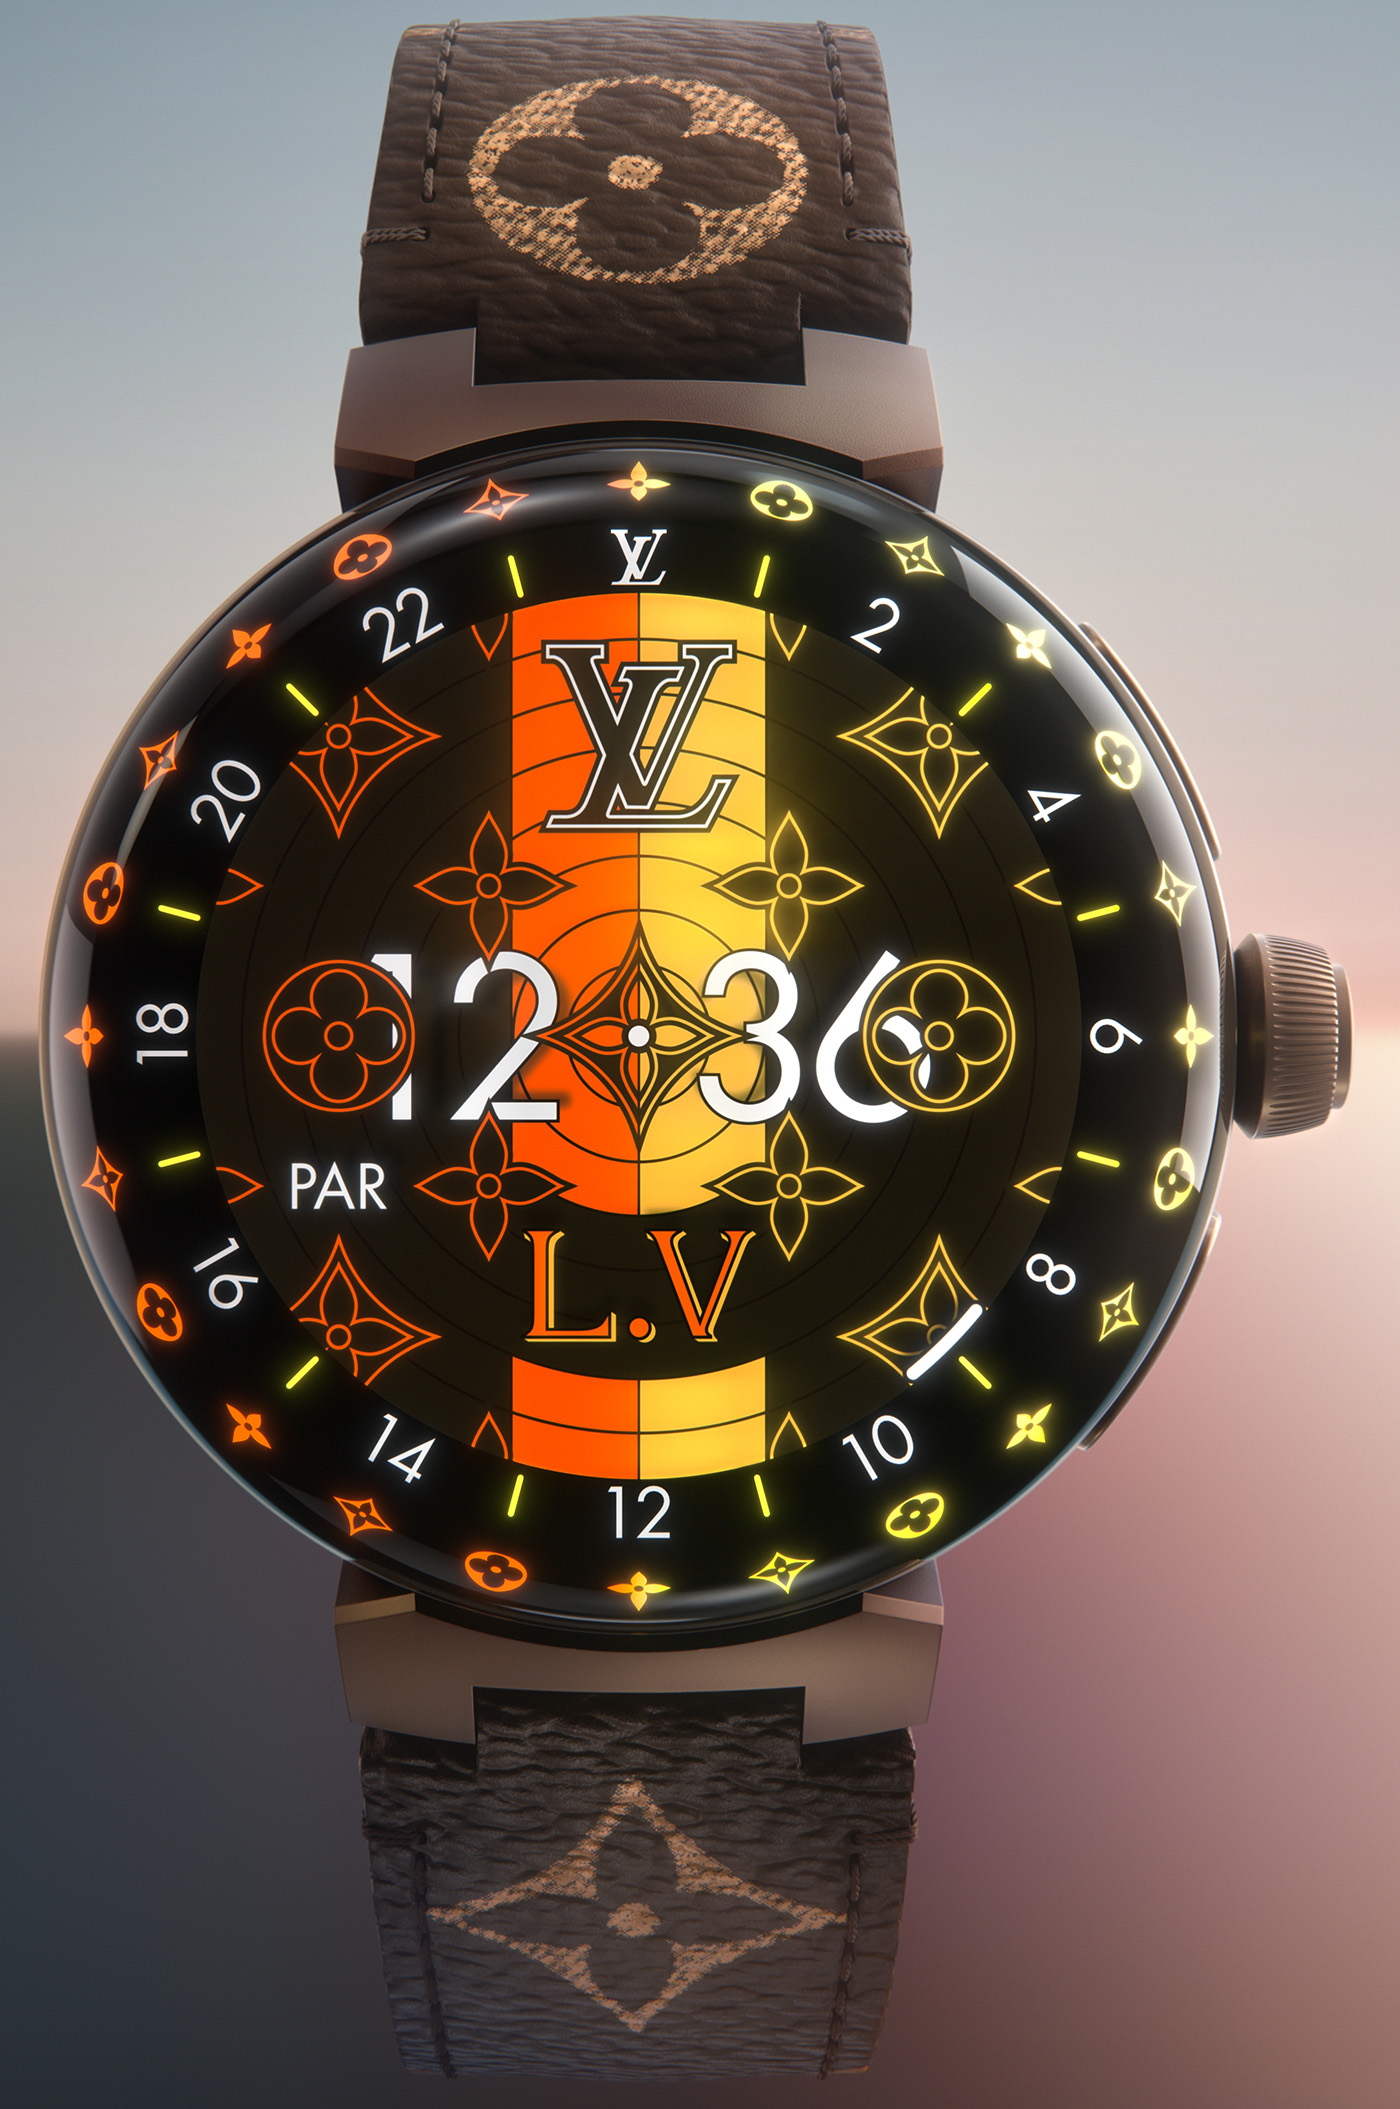 Smart watch price lv Louis Vuitton